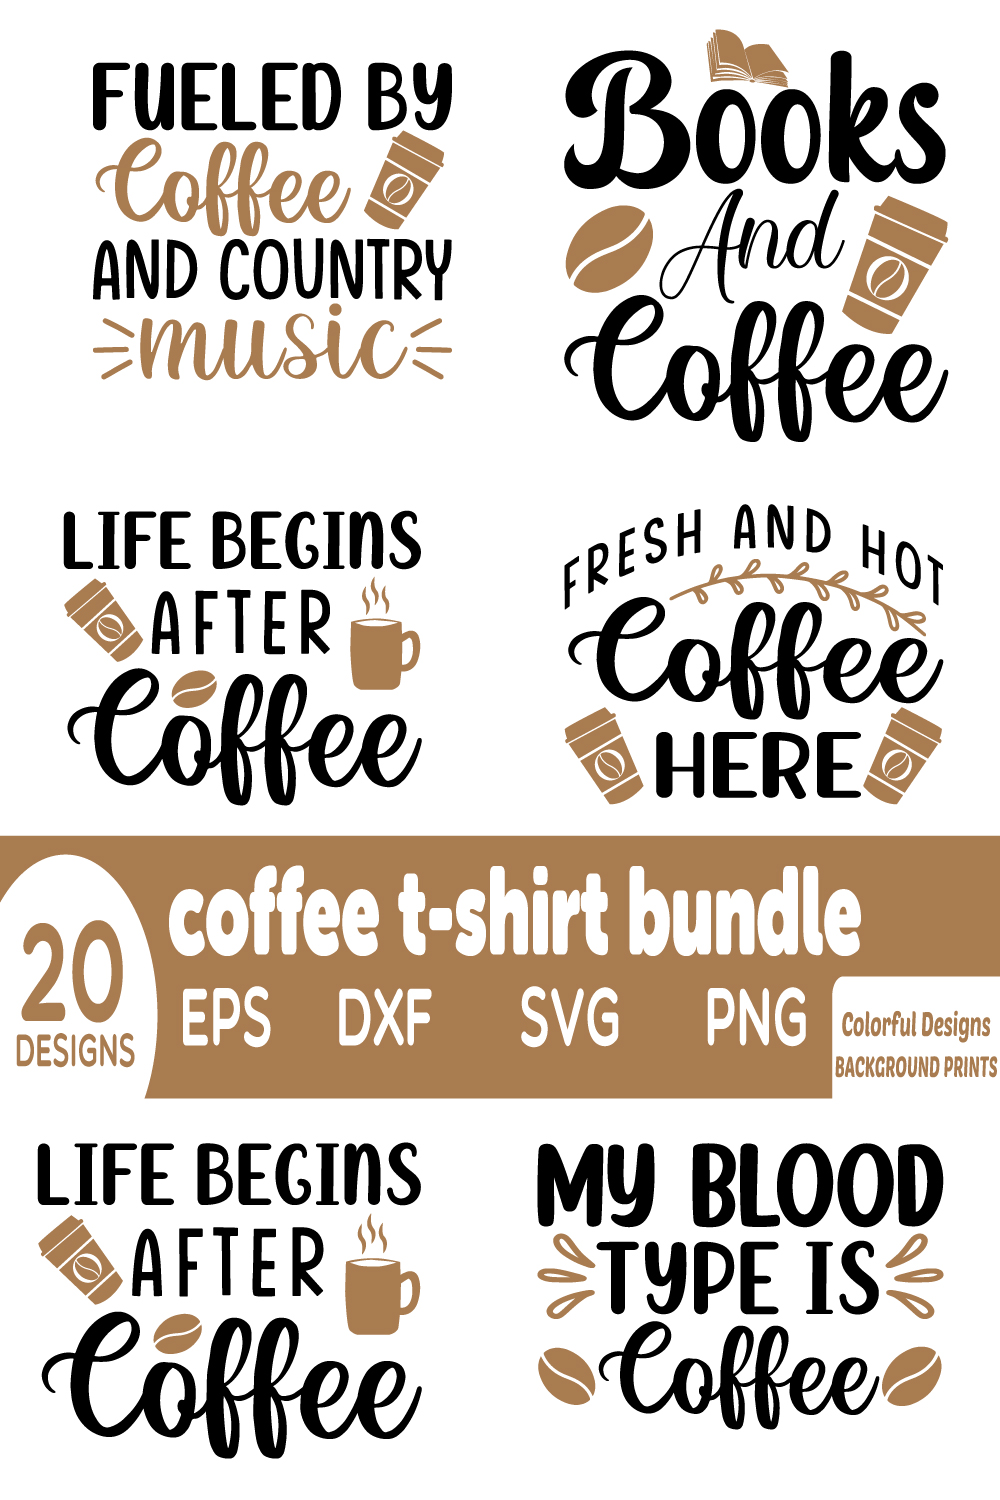 Coffee t-shirt bundle pinterest preview image.